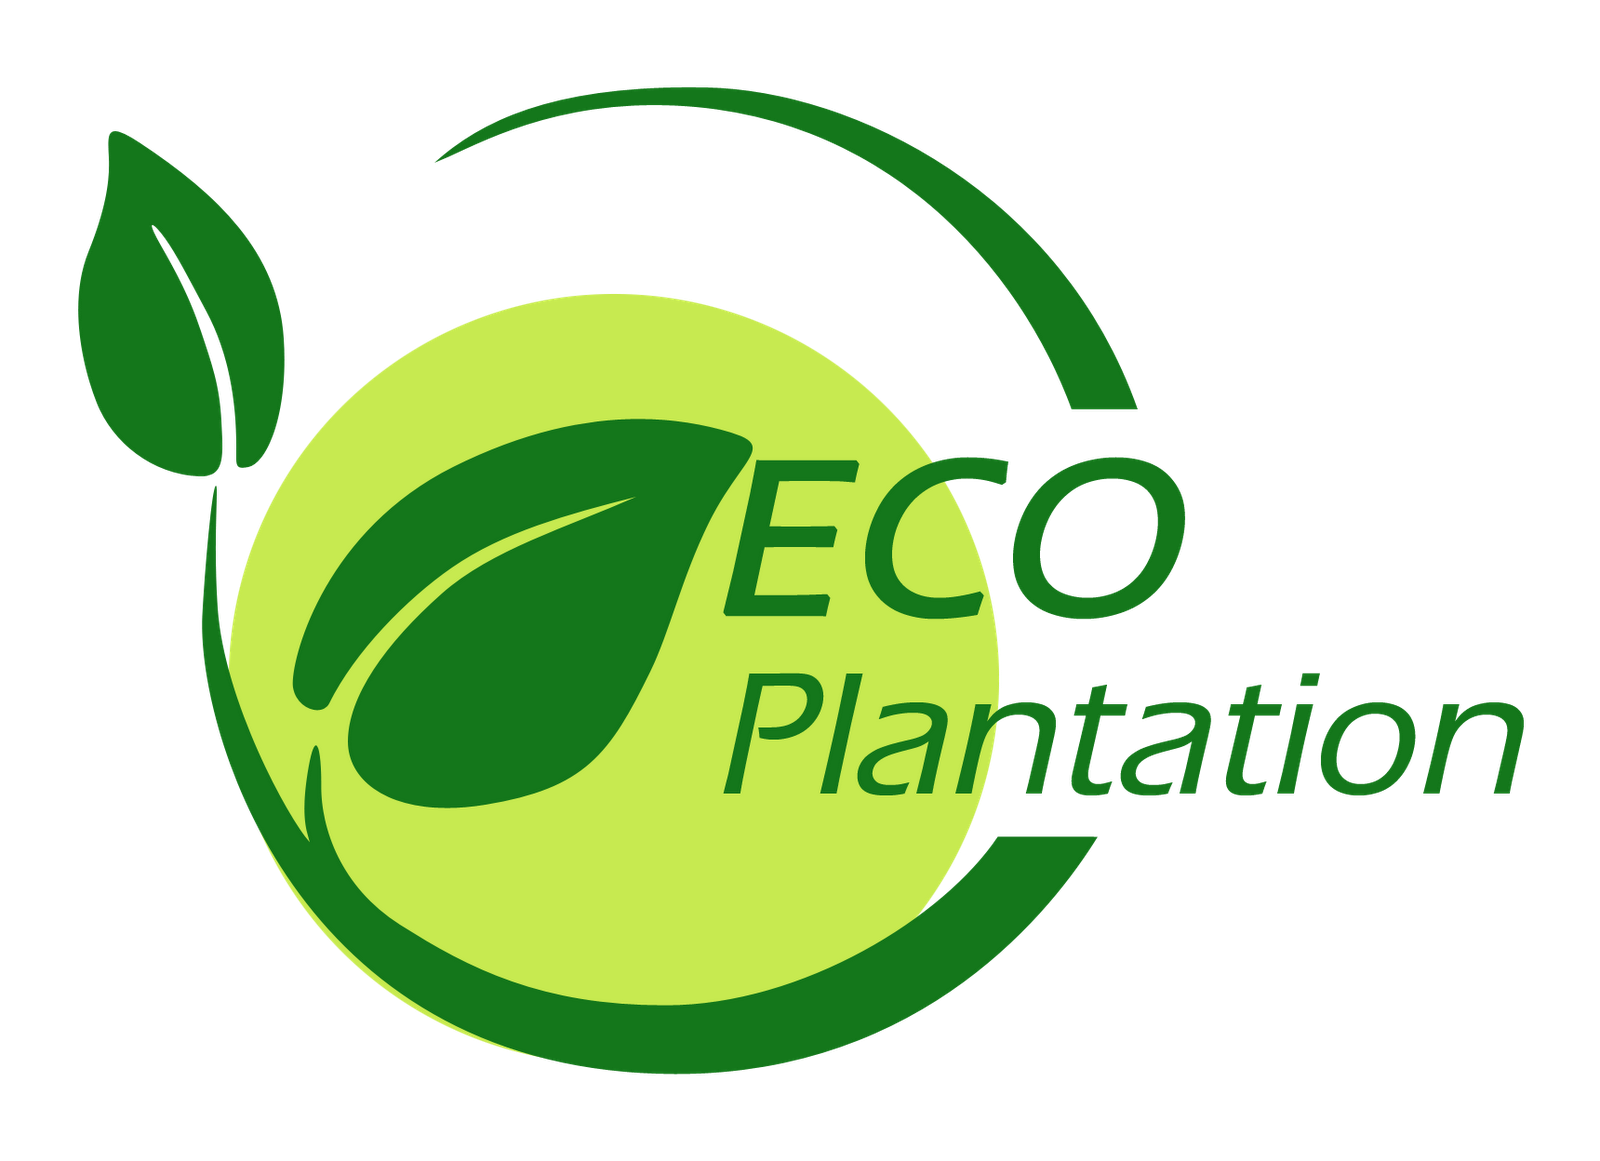 agarwood: eco plantation #5424